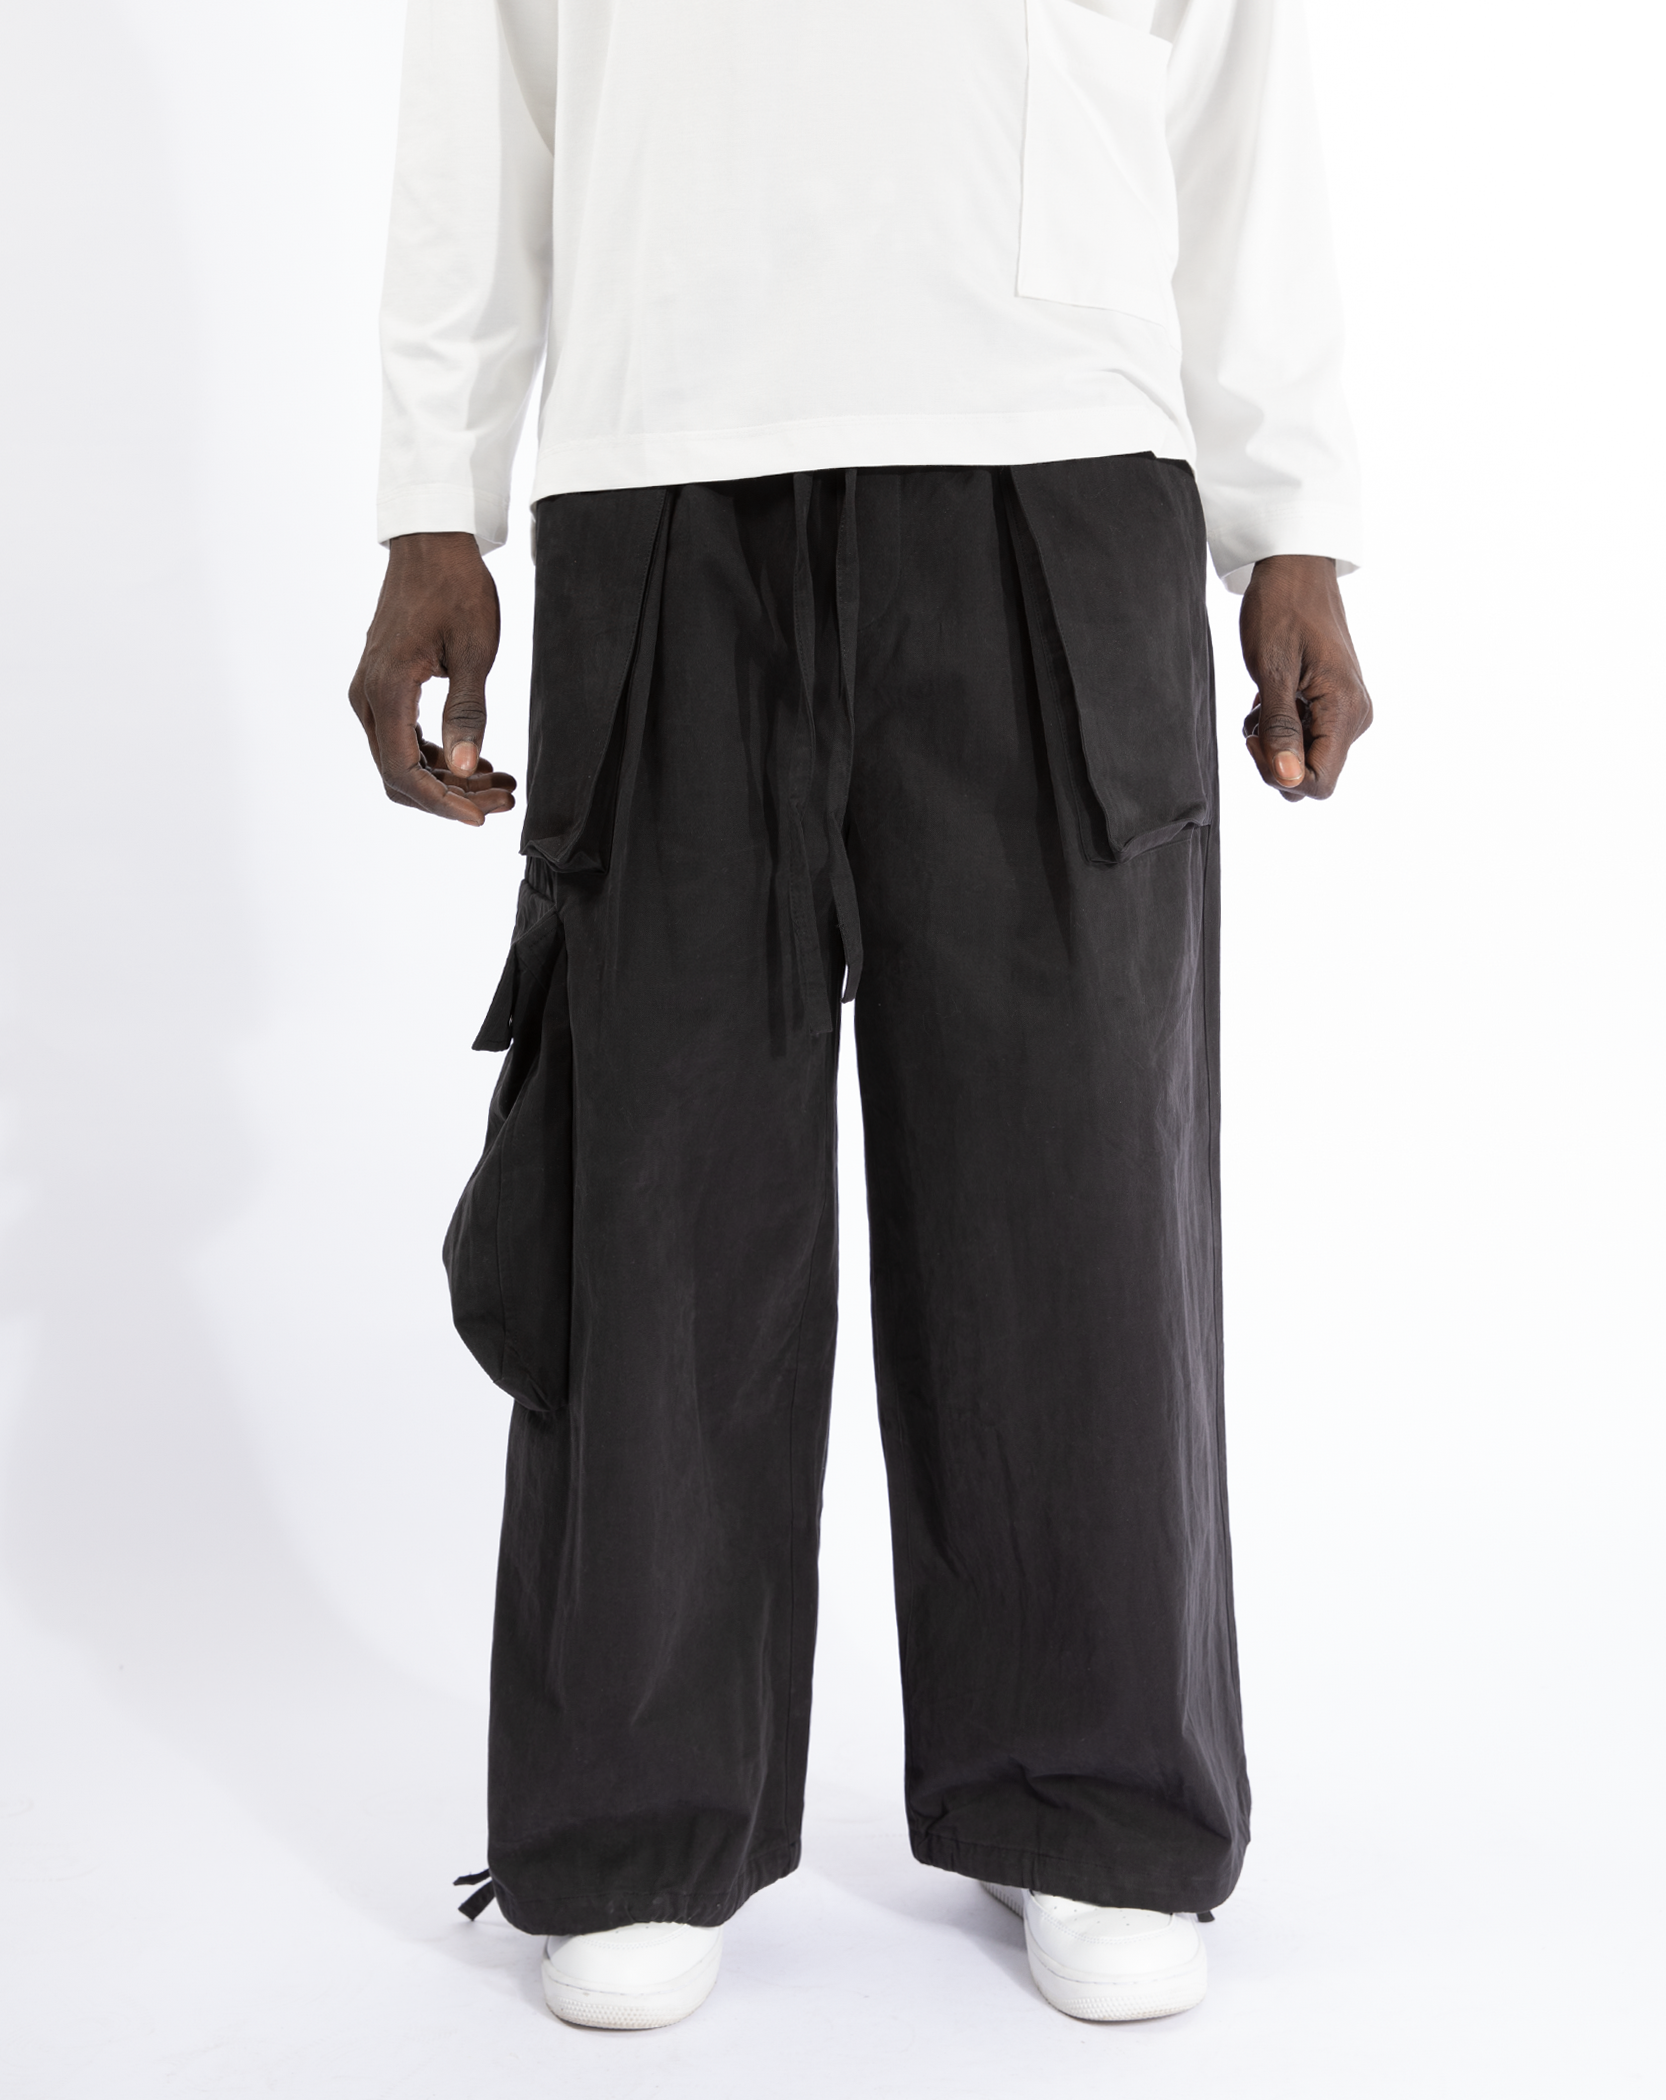  V-RO - Oversized Pants dark grey